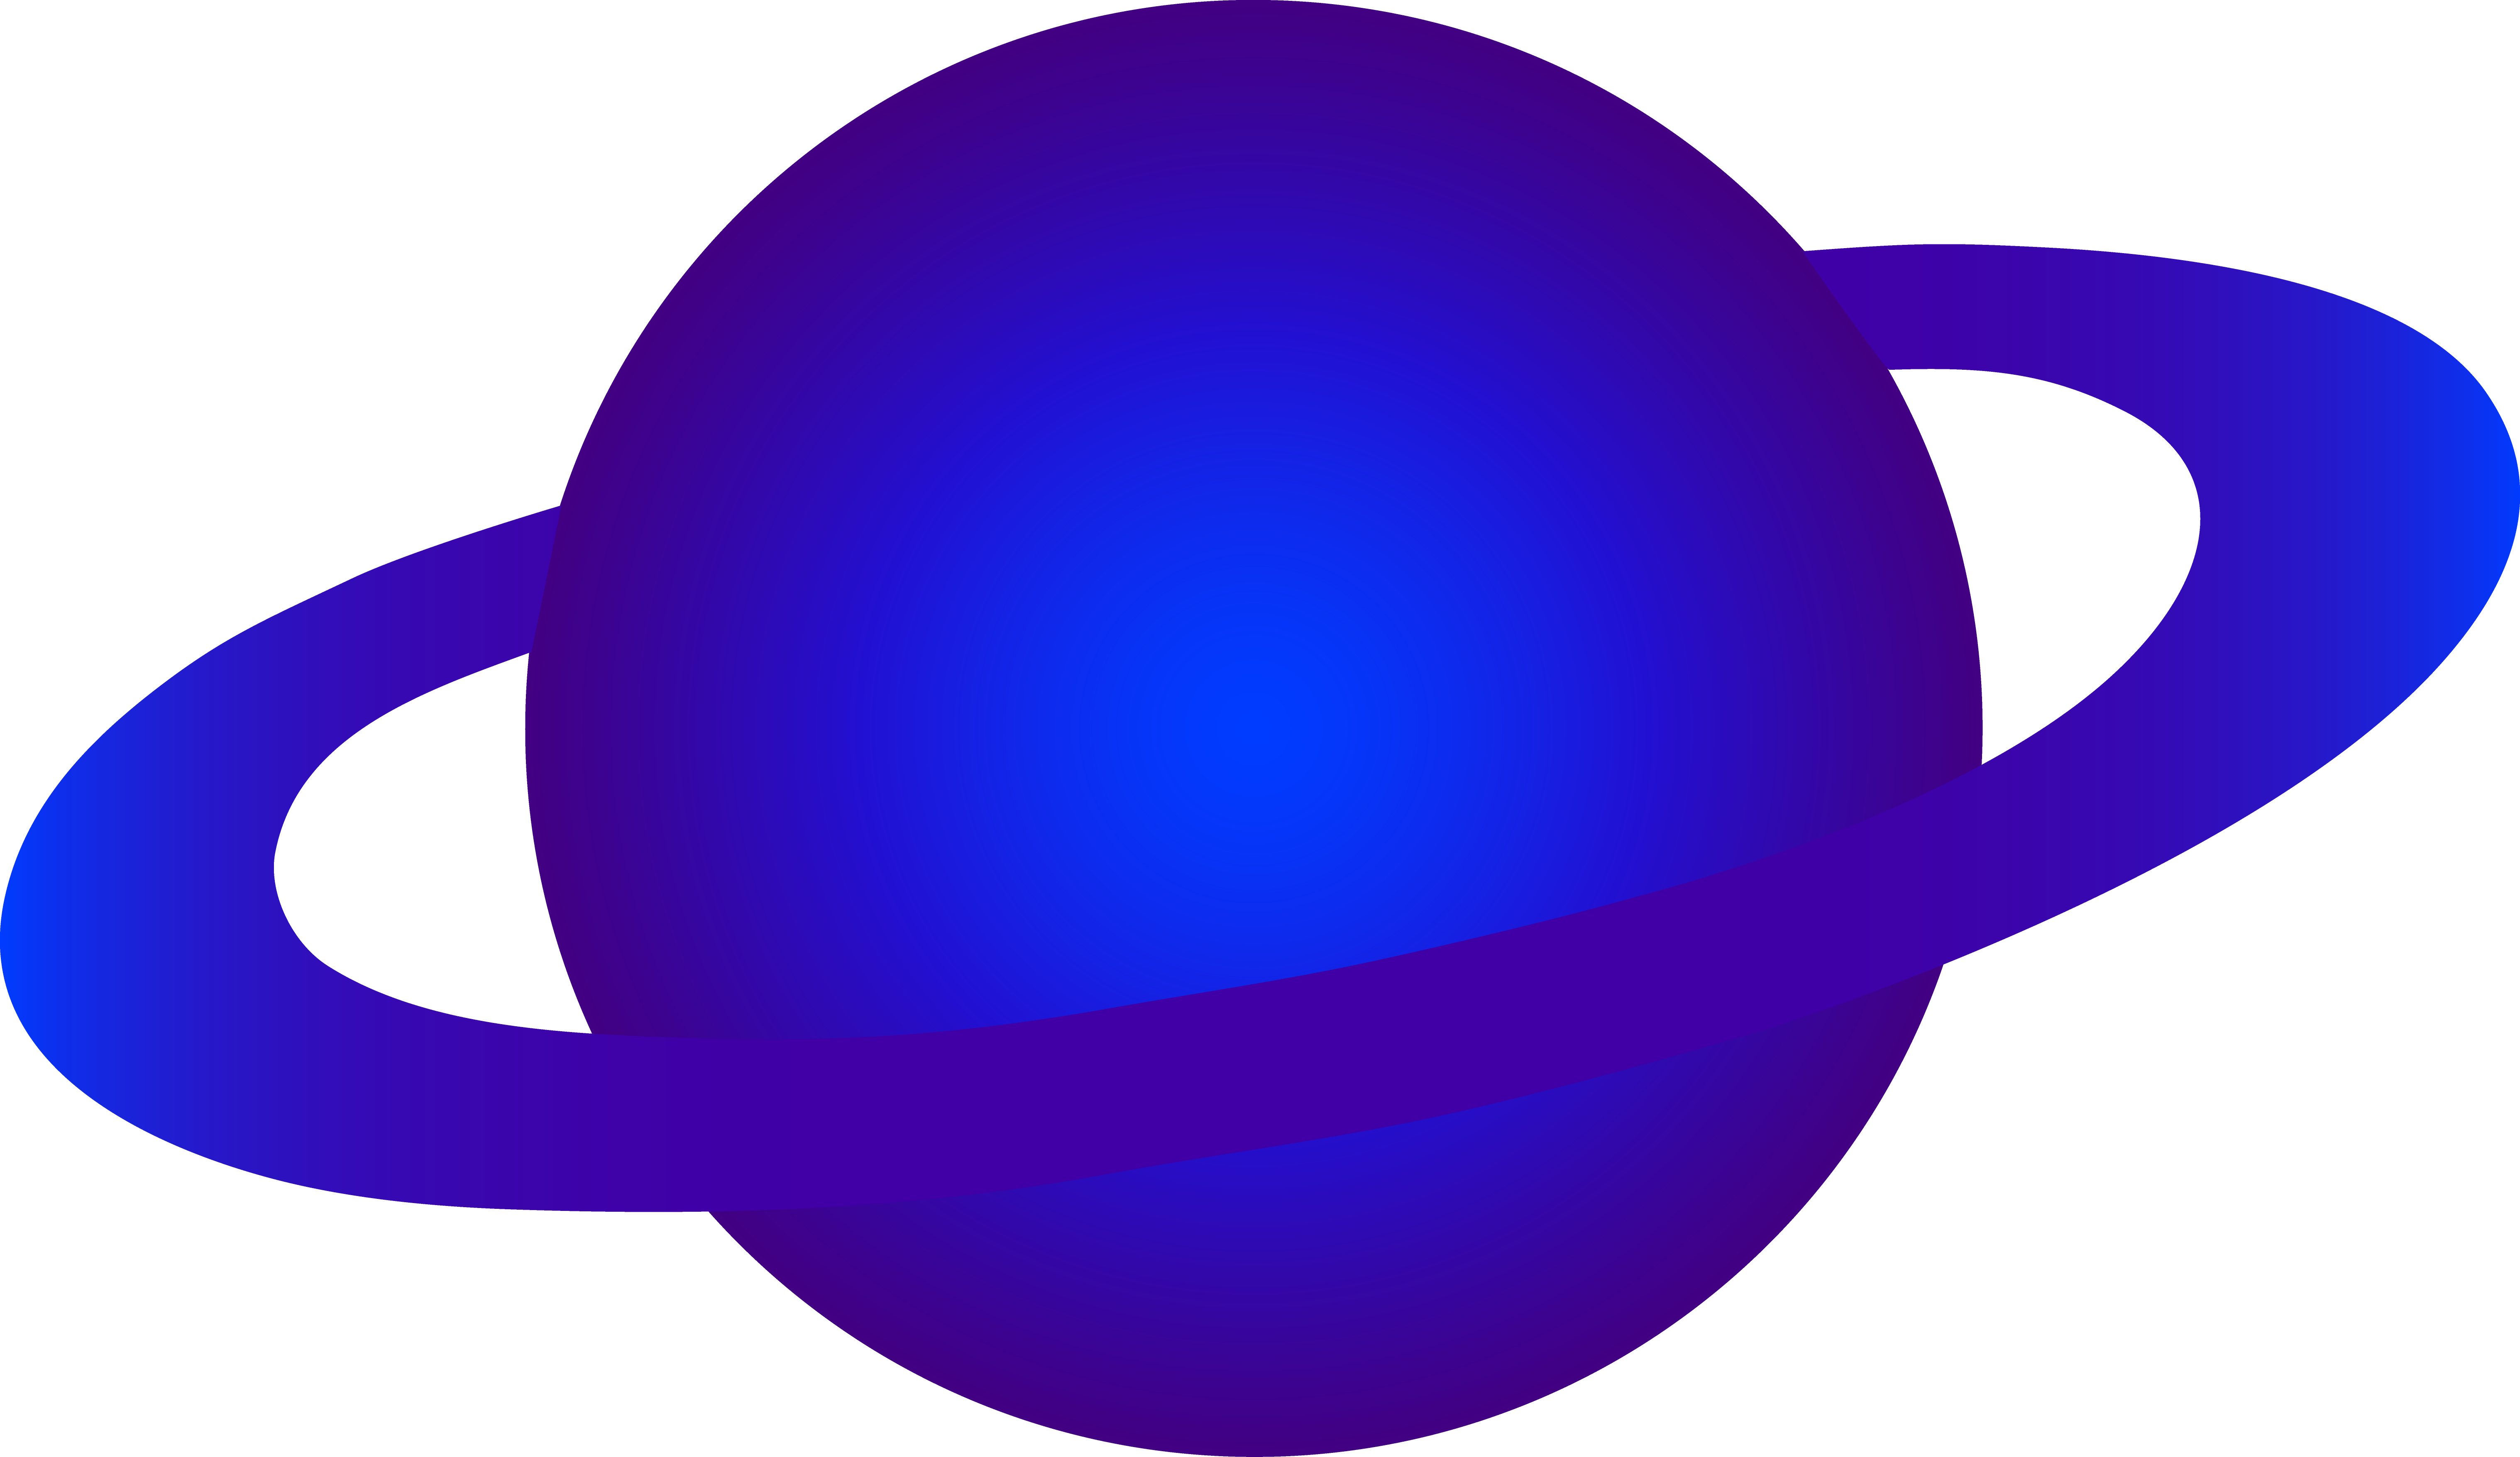 Blue Alien Ringed Planet - Free Clip Art